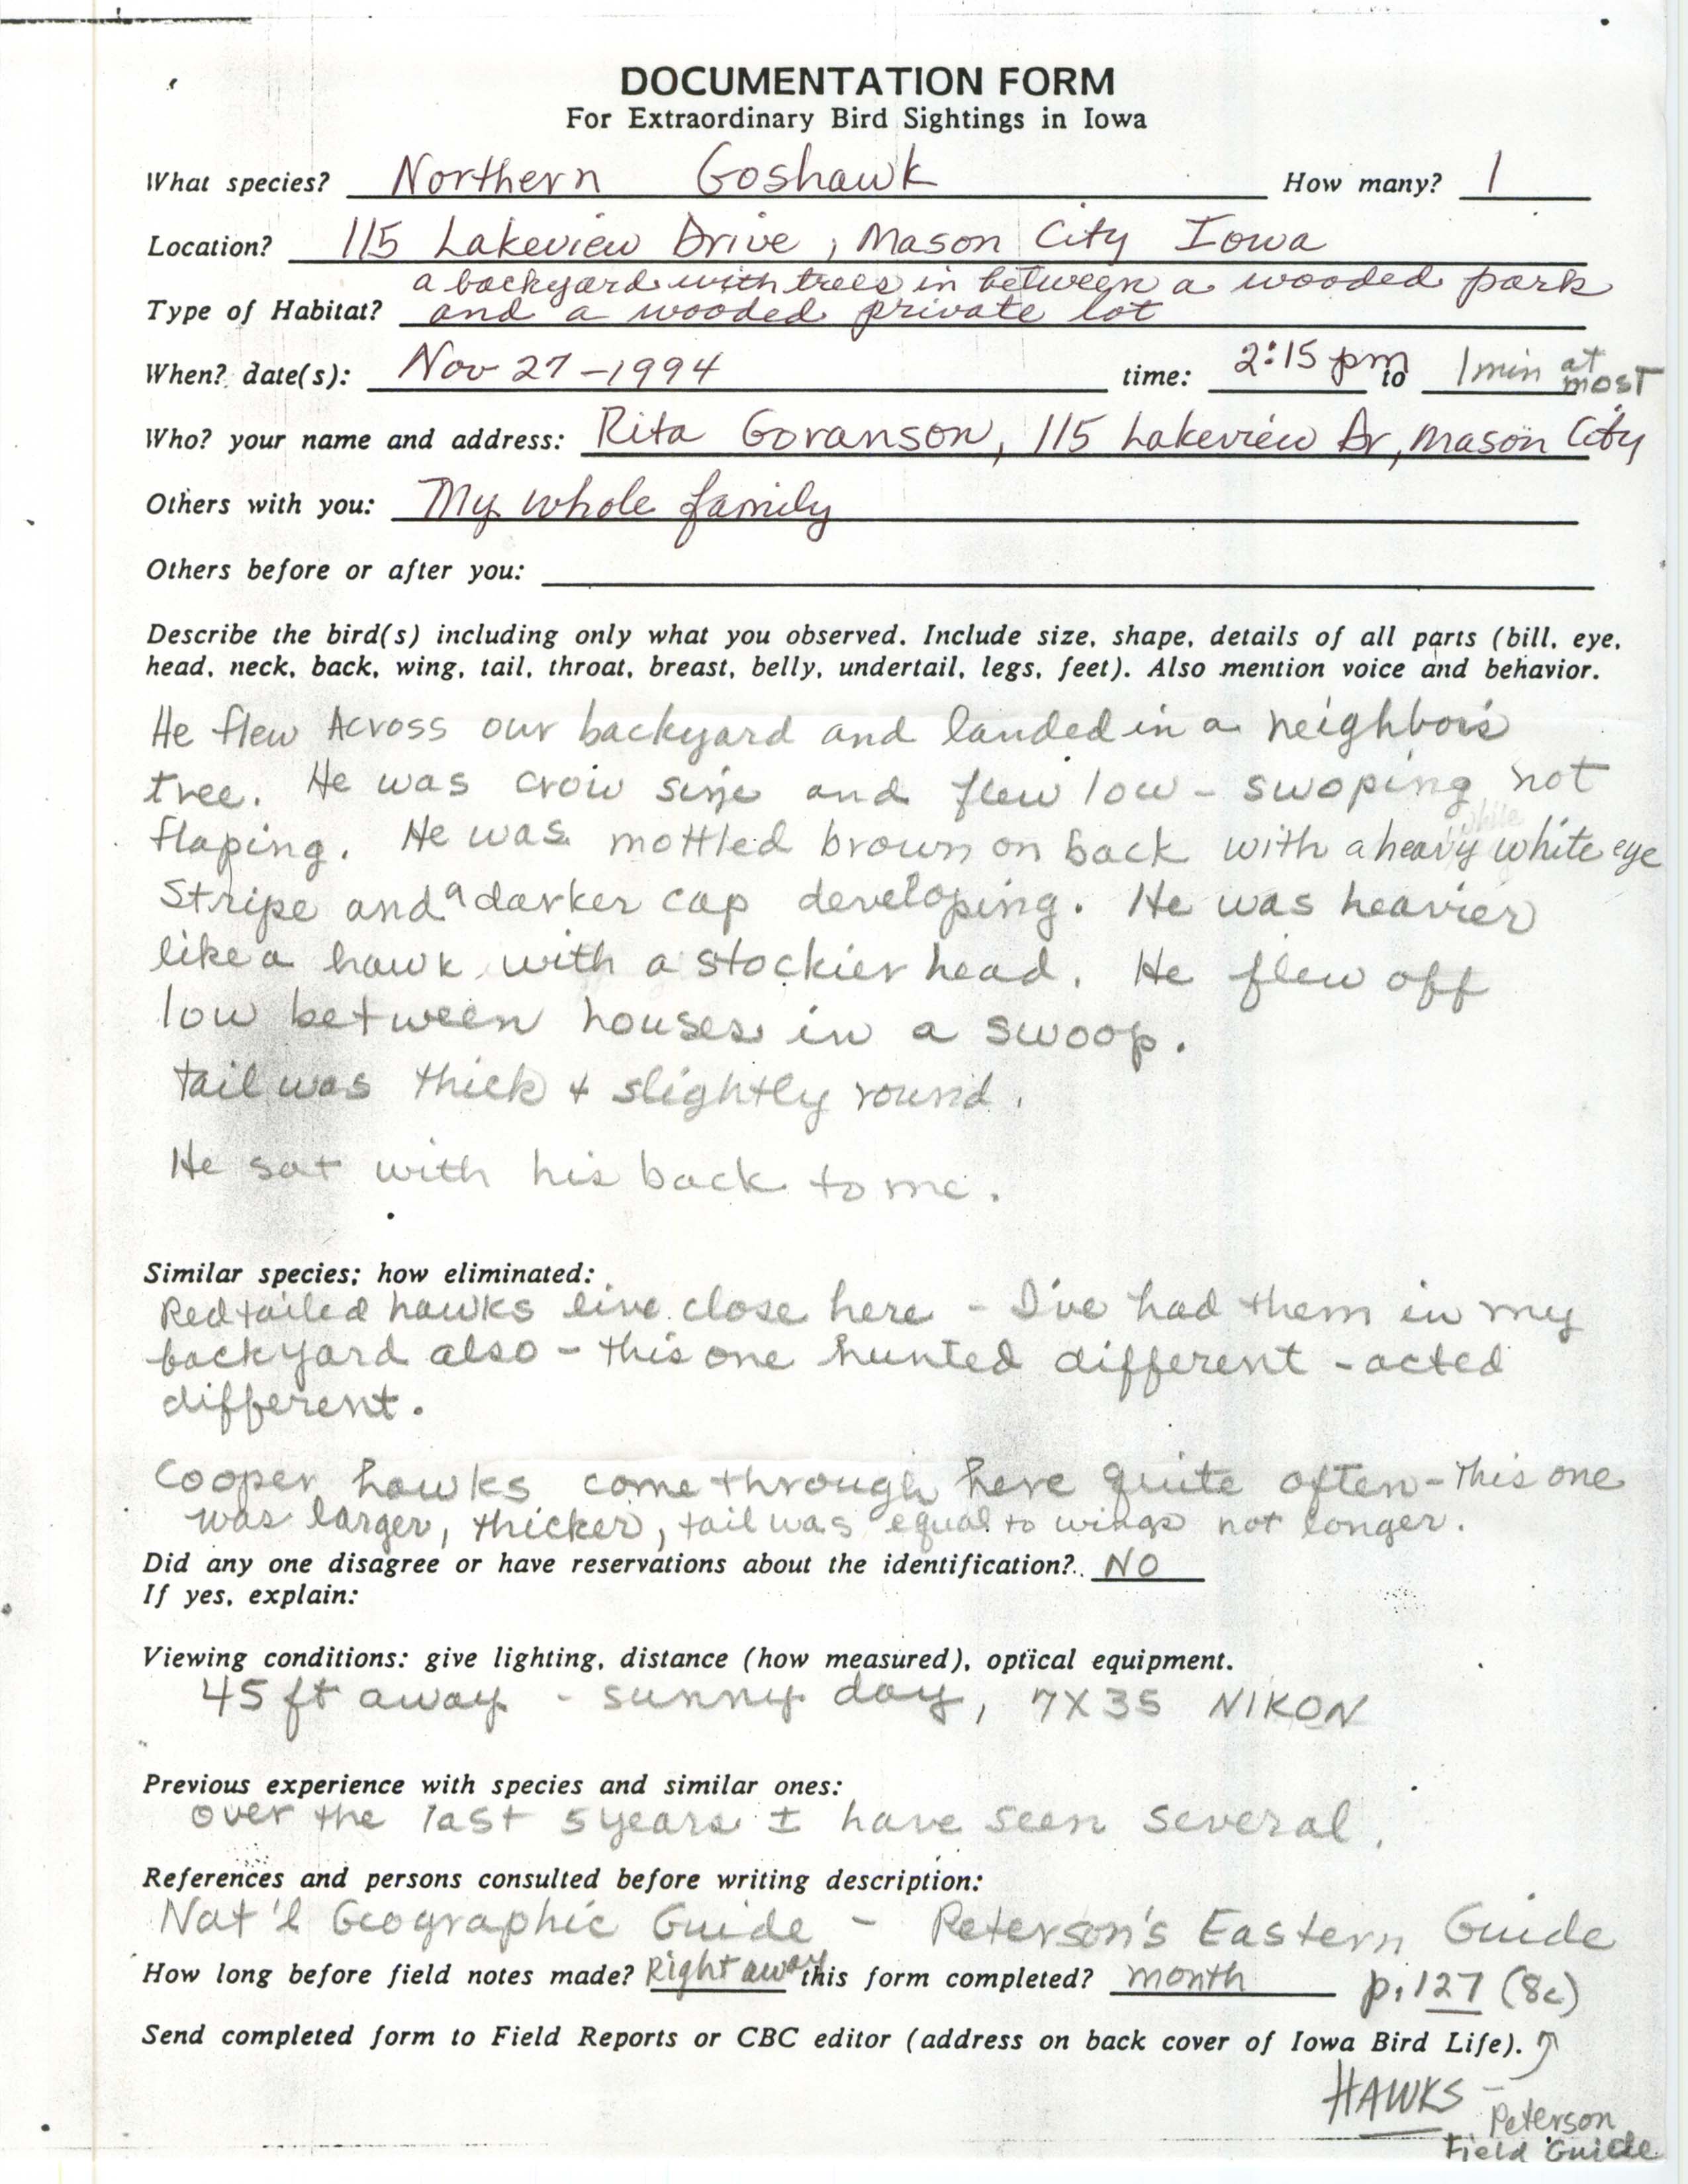 Rare bird documentation form for Northern Goshawk at Mason City, 1994